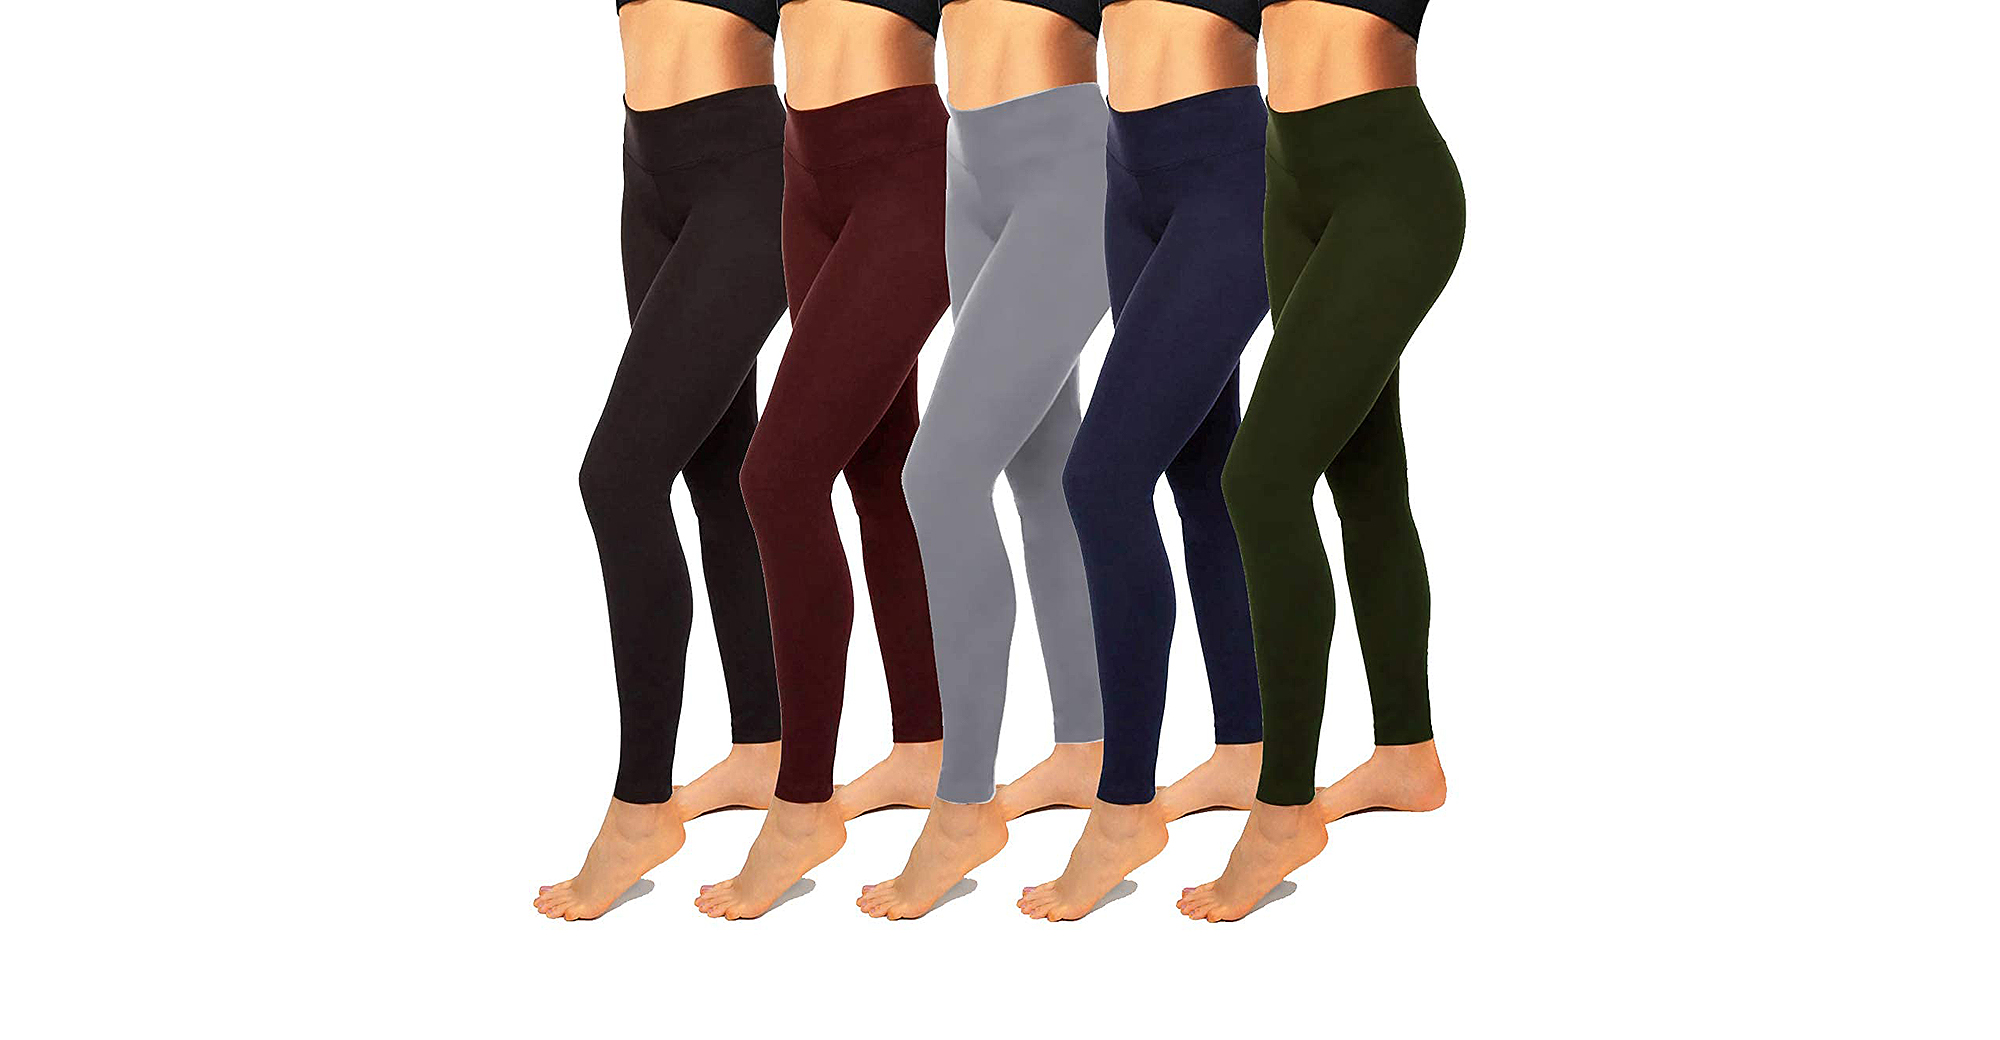 https://www.usmagazine.com/wp-content/uploads/2020/11/amazon-hi-clasmix-leggings.jpg?quality=86&strip=all